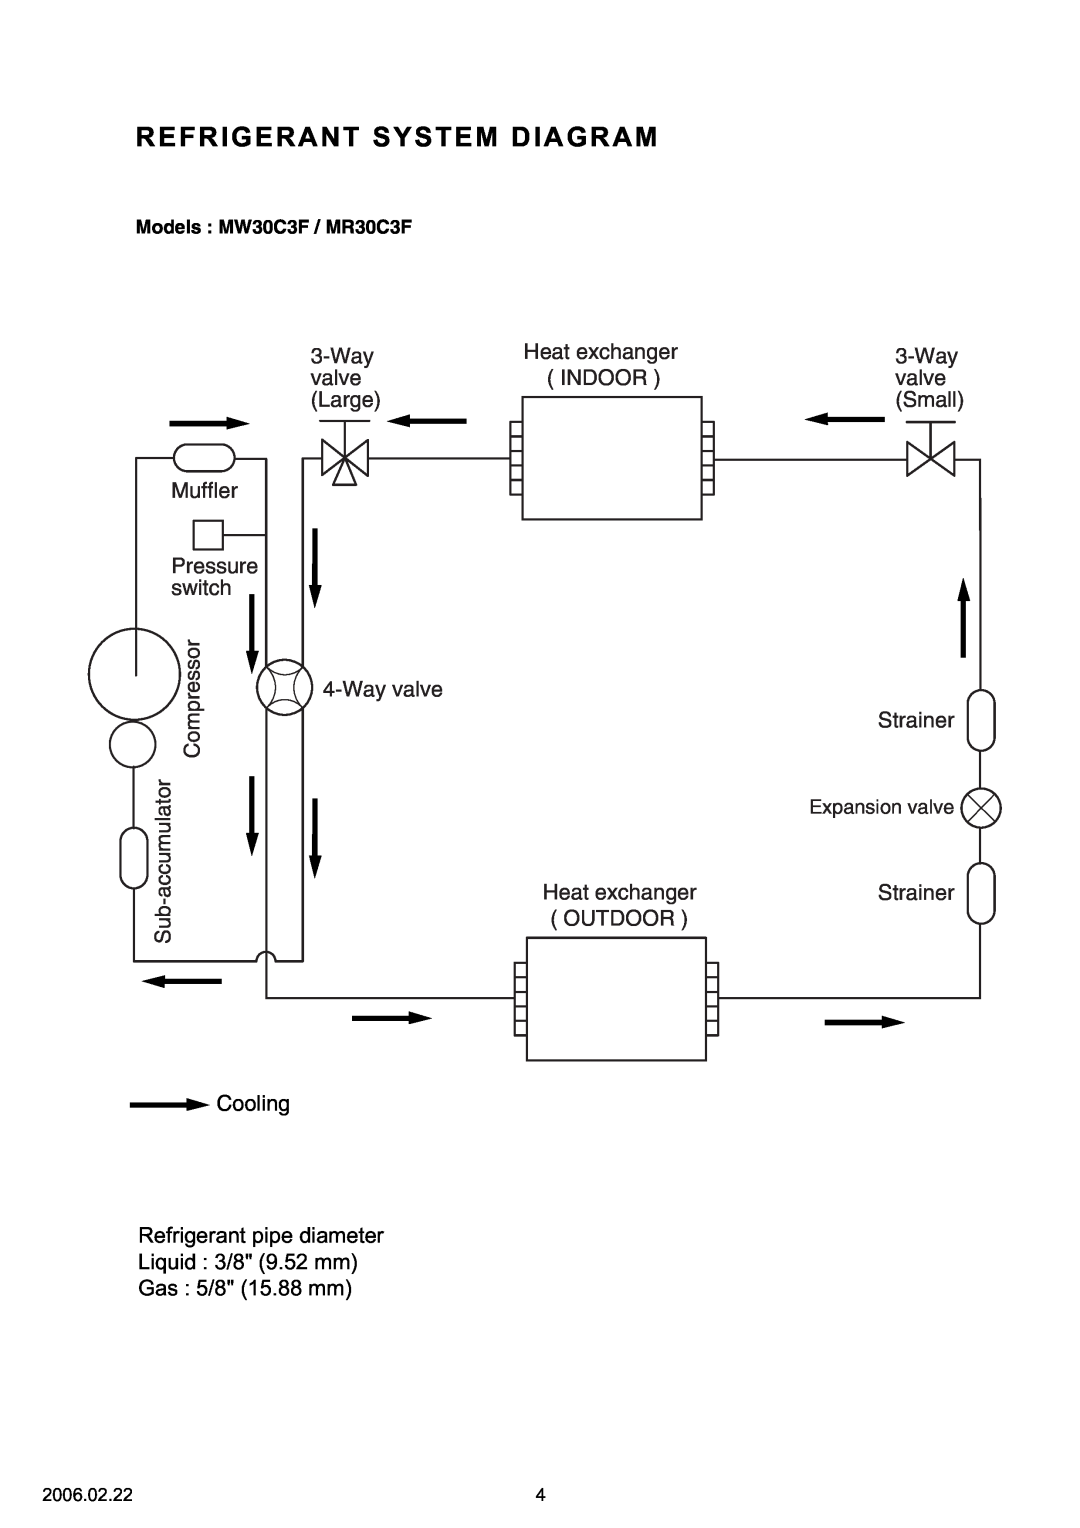 Friedrich MR30C3F, MW30C3F Refrigerant System Diagram, Refrigerant pipe diameter Liquid 3/8 9.52 mm, Gas 5/8 15.88 mm 